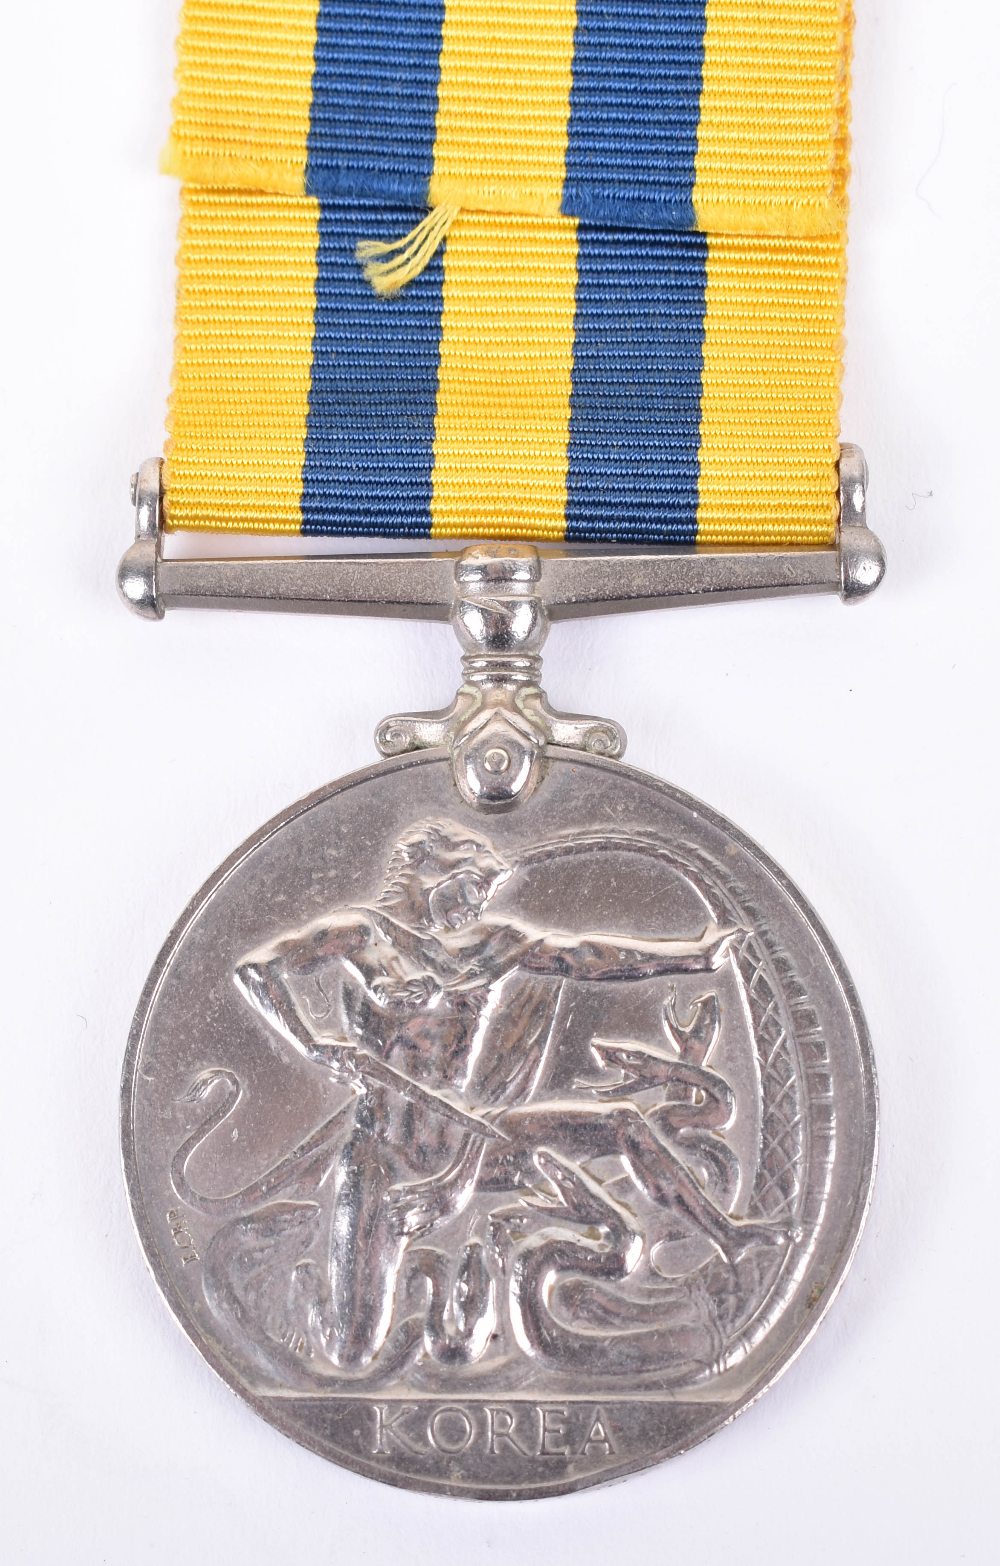 Queens Korea Campaign Medal 1950-53 Royal Artillery - Image 2 of 3